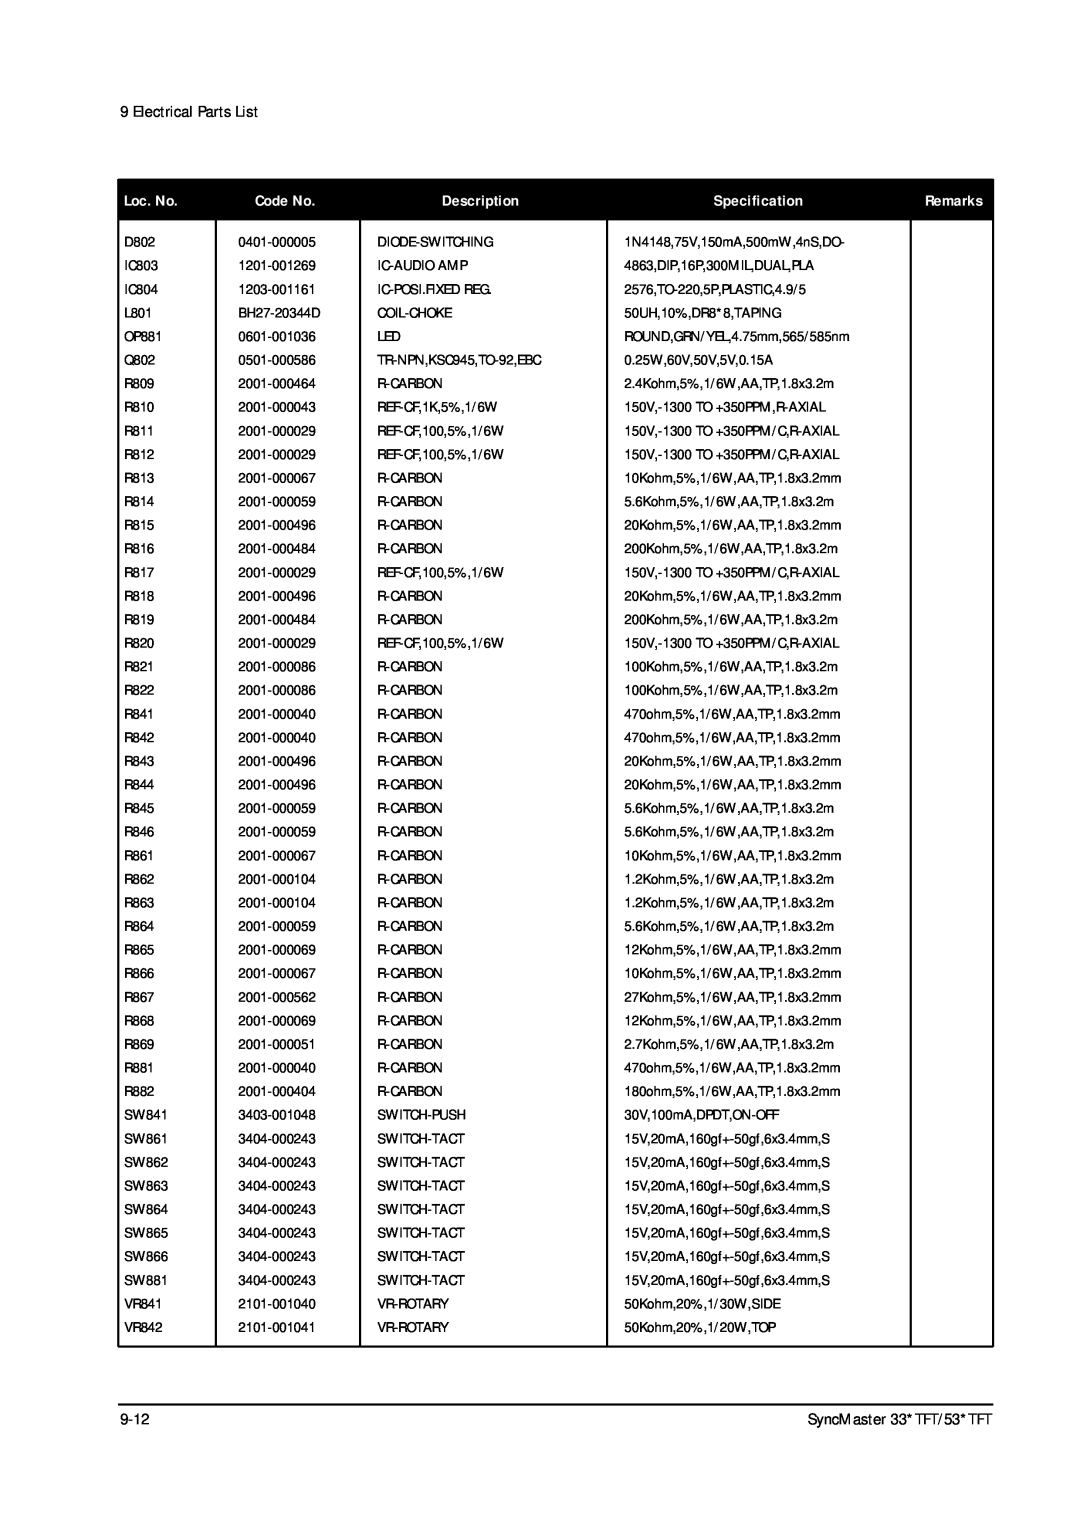 Samsung 531 TFT, 530TFT, 530 TFT, 531TFT, 330TFT, 331 TFT Electrical Parts List, Loc. No, Description, Specification, Remarks 